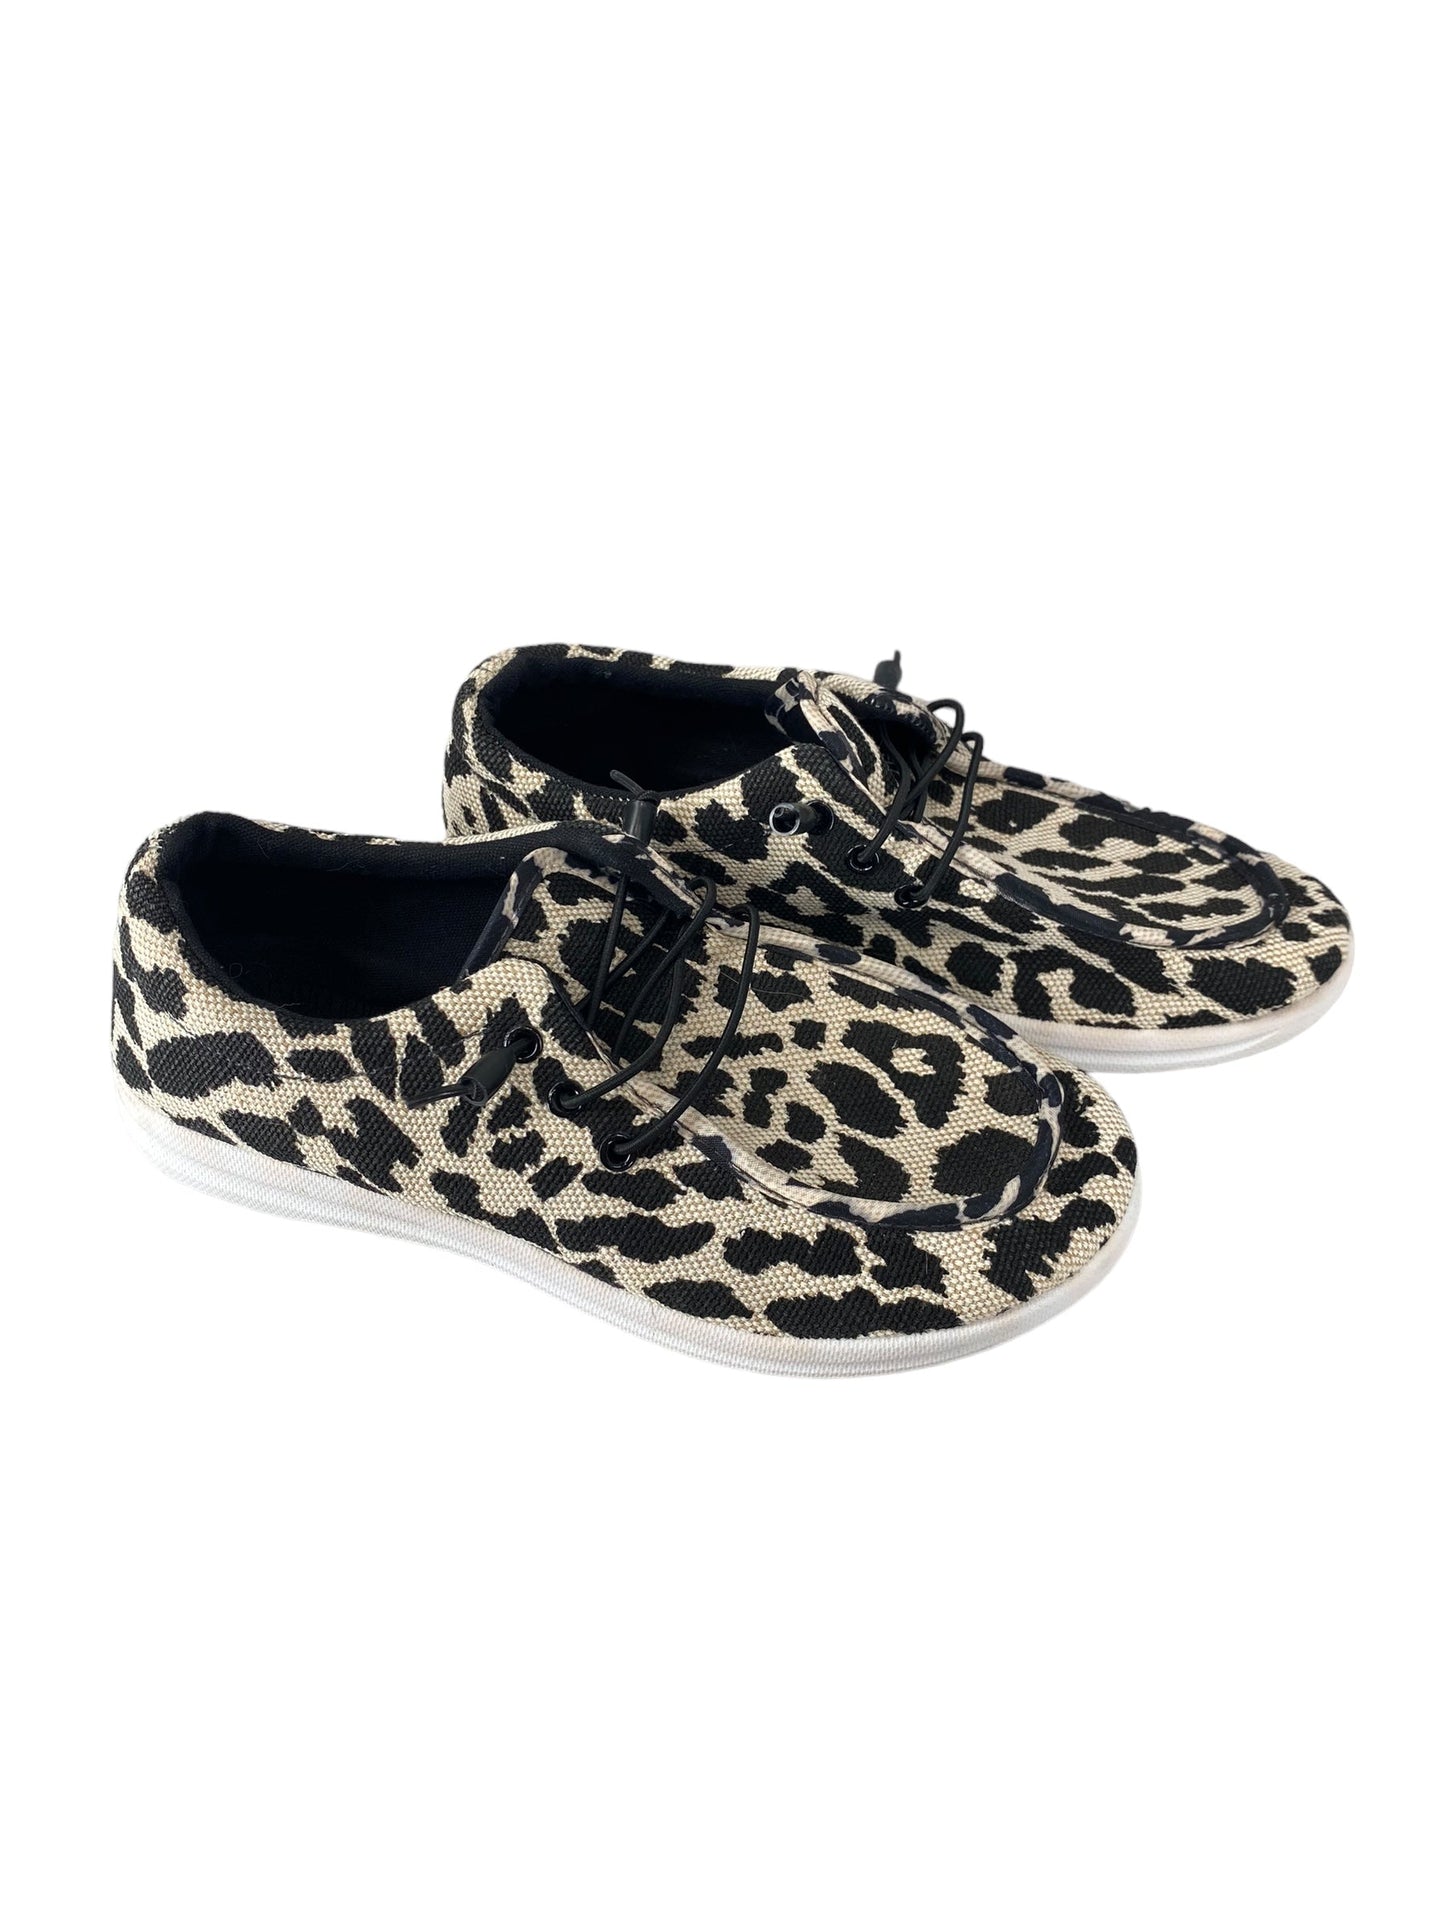 Animal Print Shoes Flats Yoki, Size 8.5